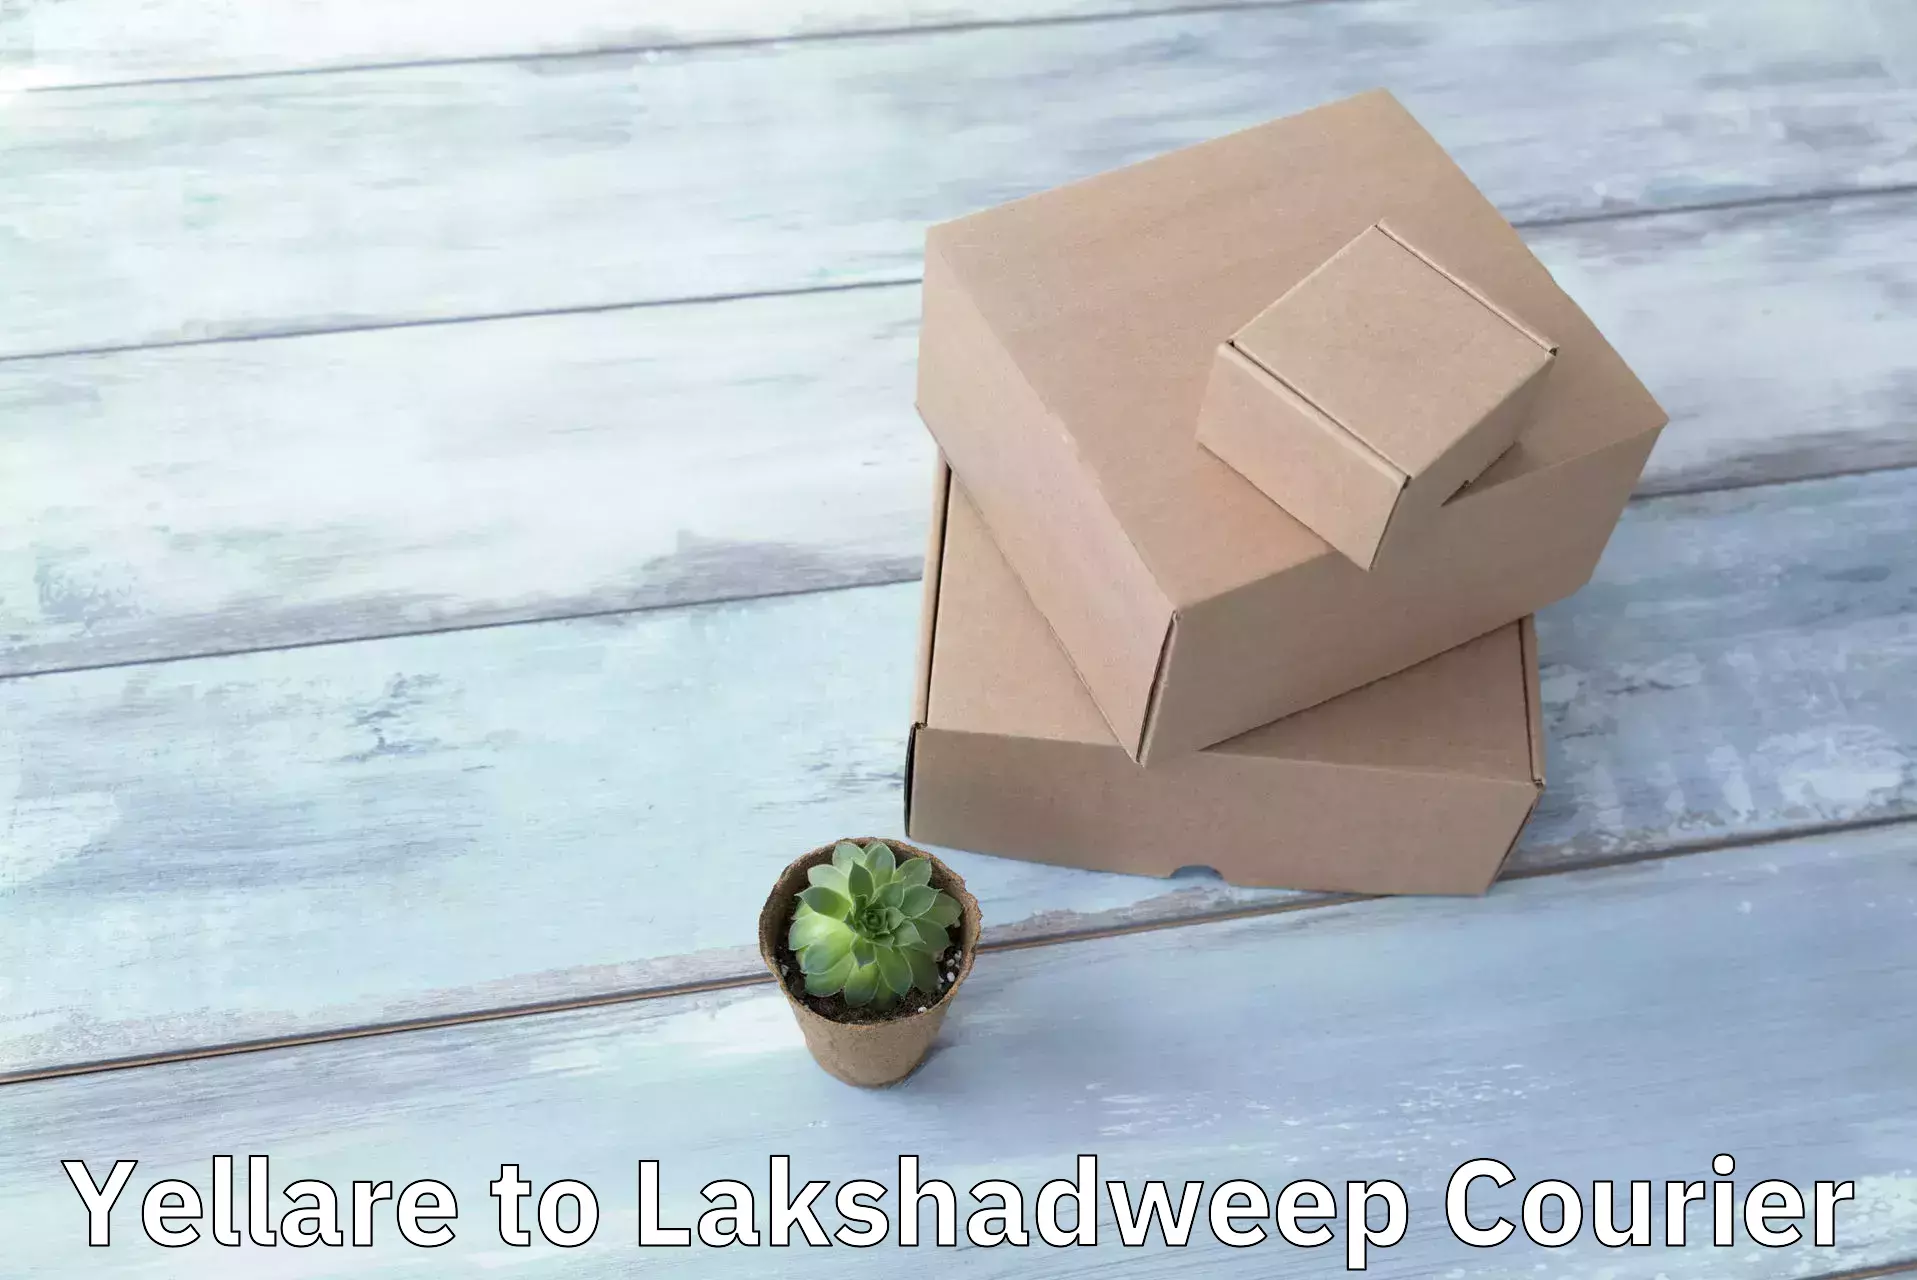 High-speed parcel service Yellare to Lakshadweep